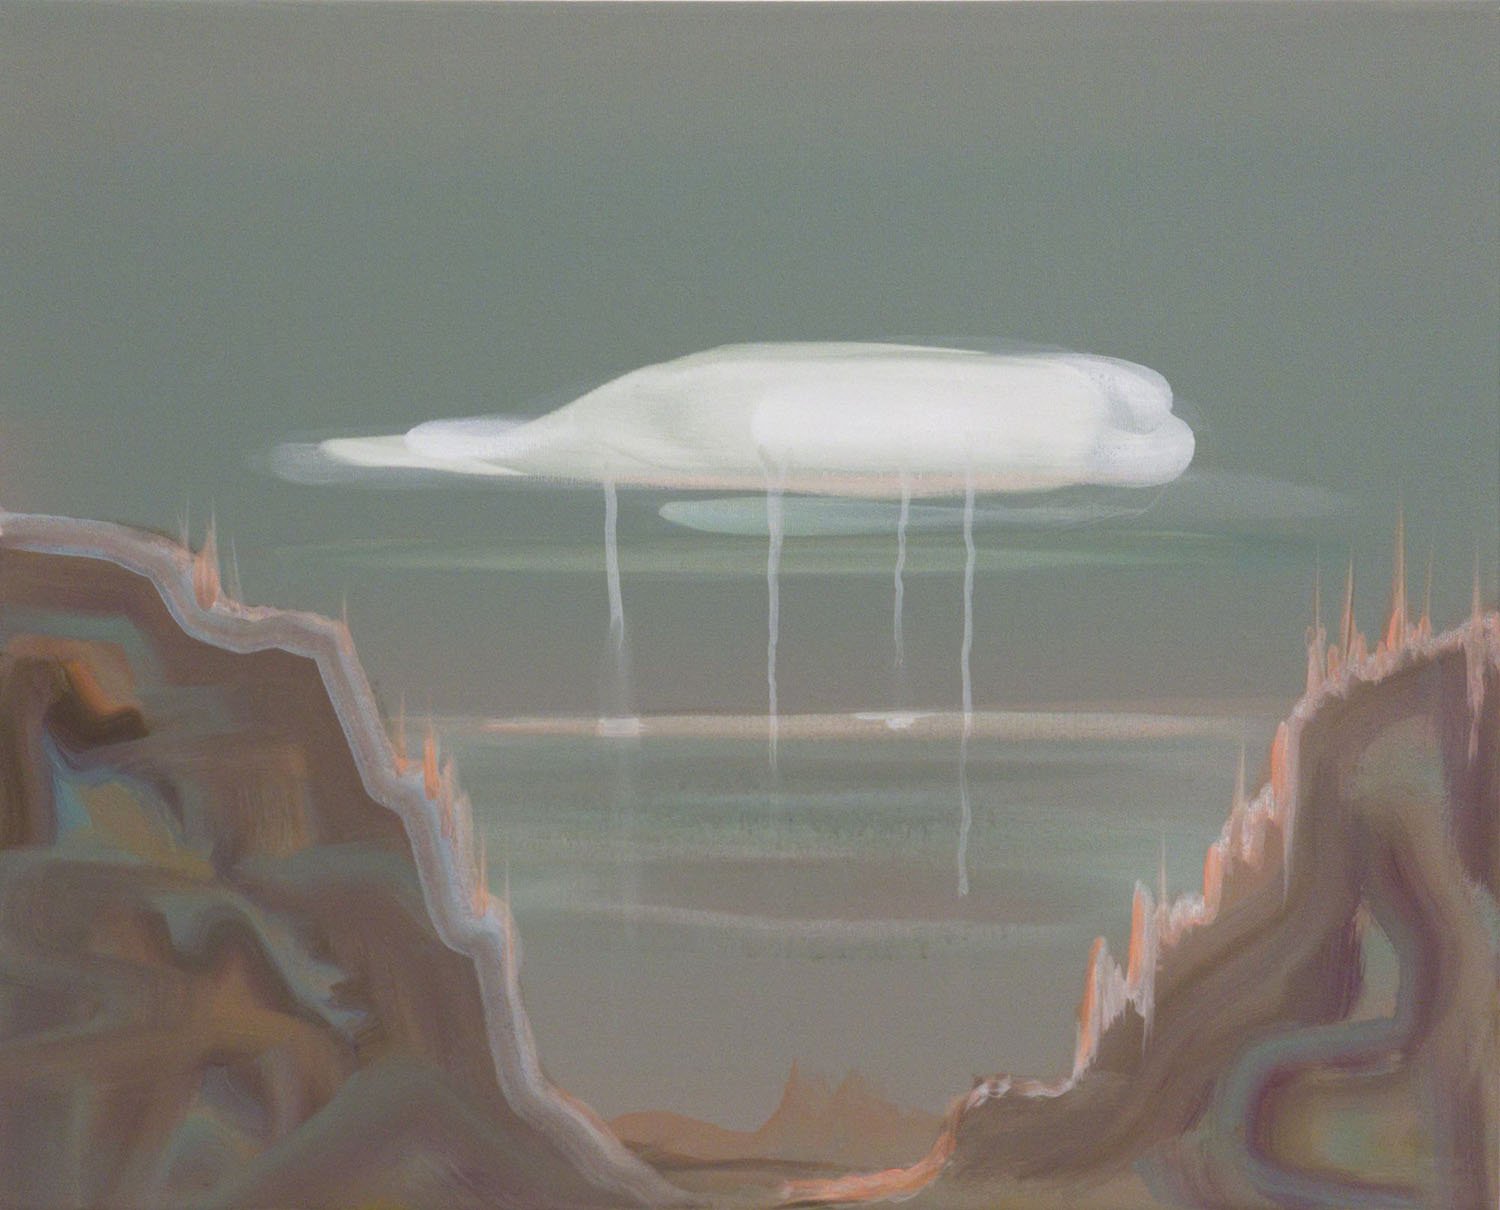 Baby Seal Cloud, Wanda Koop